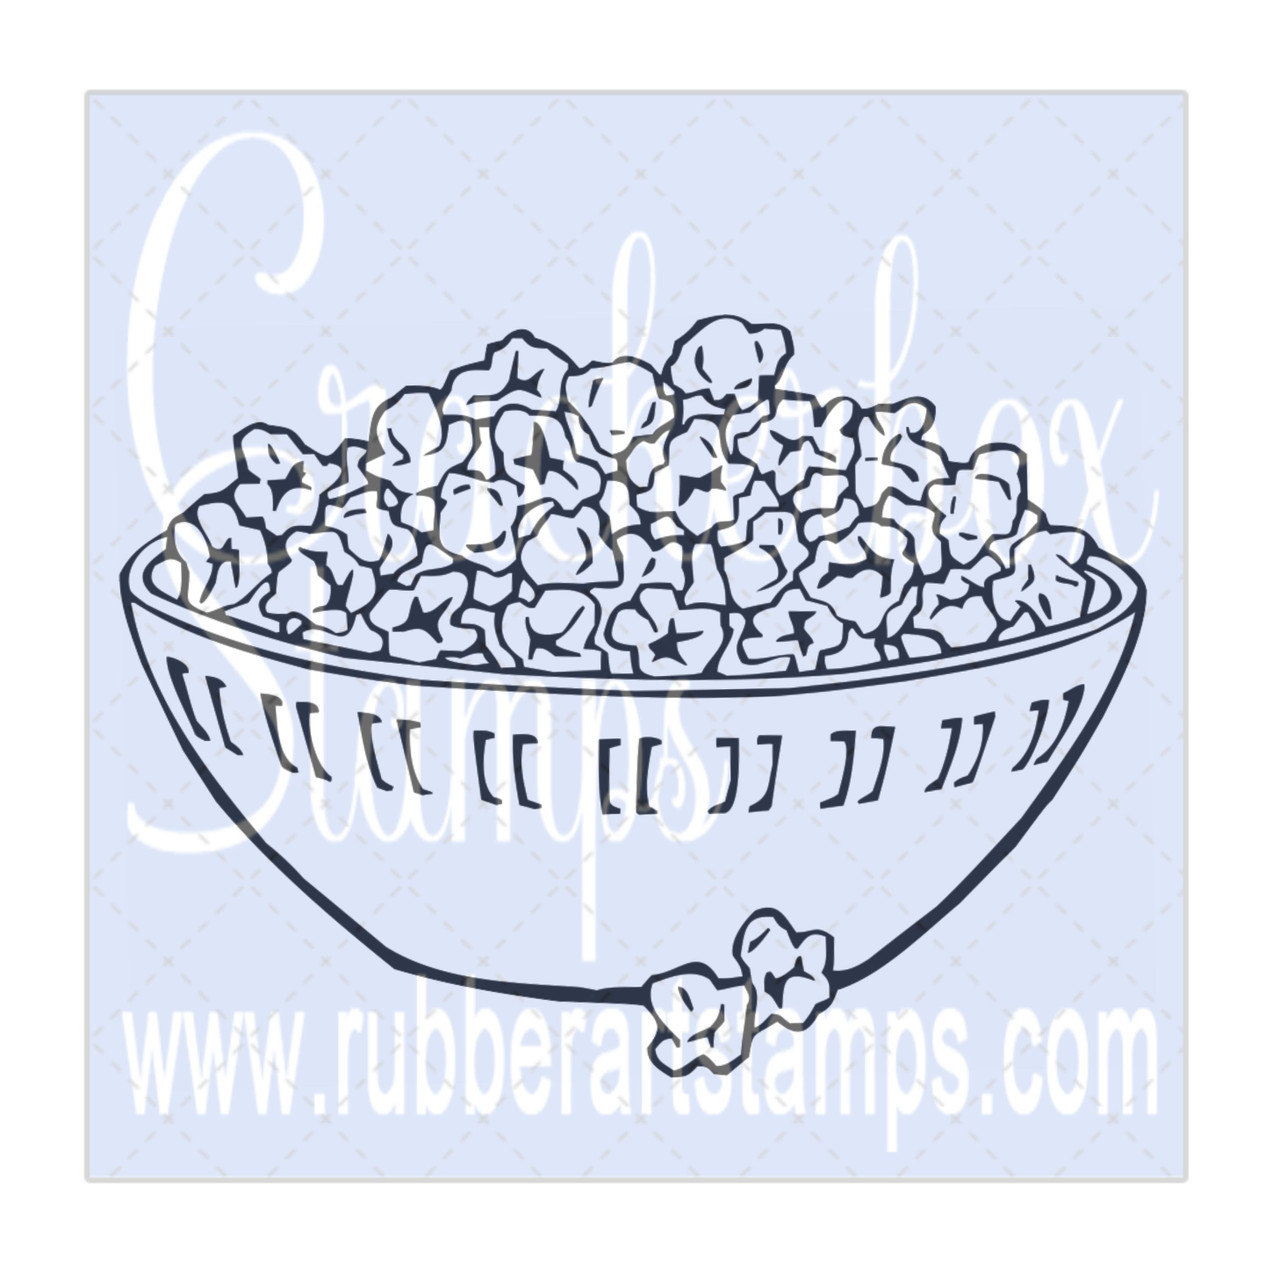 Popcorn bowl